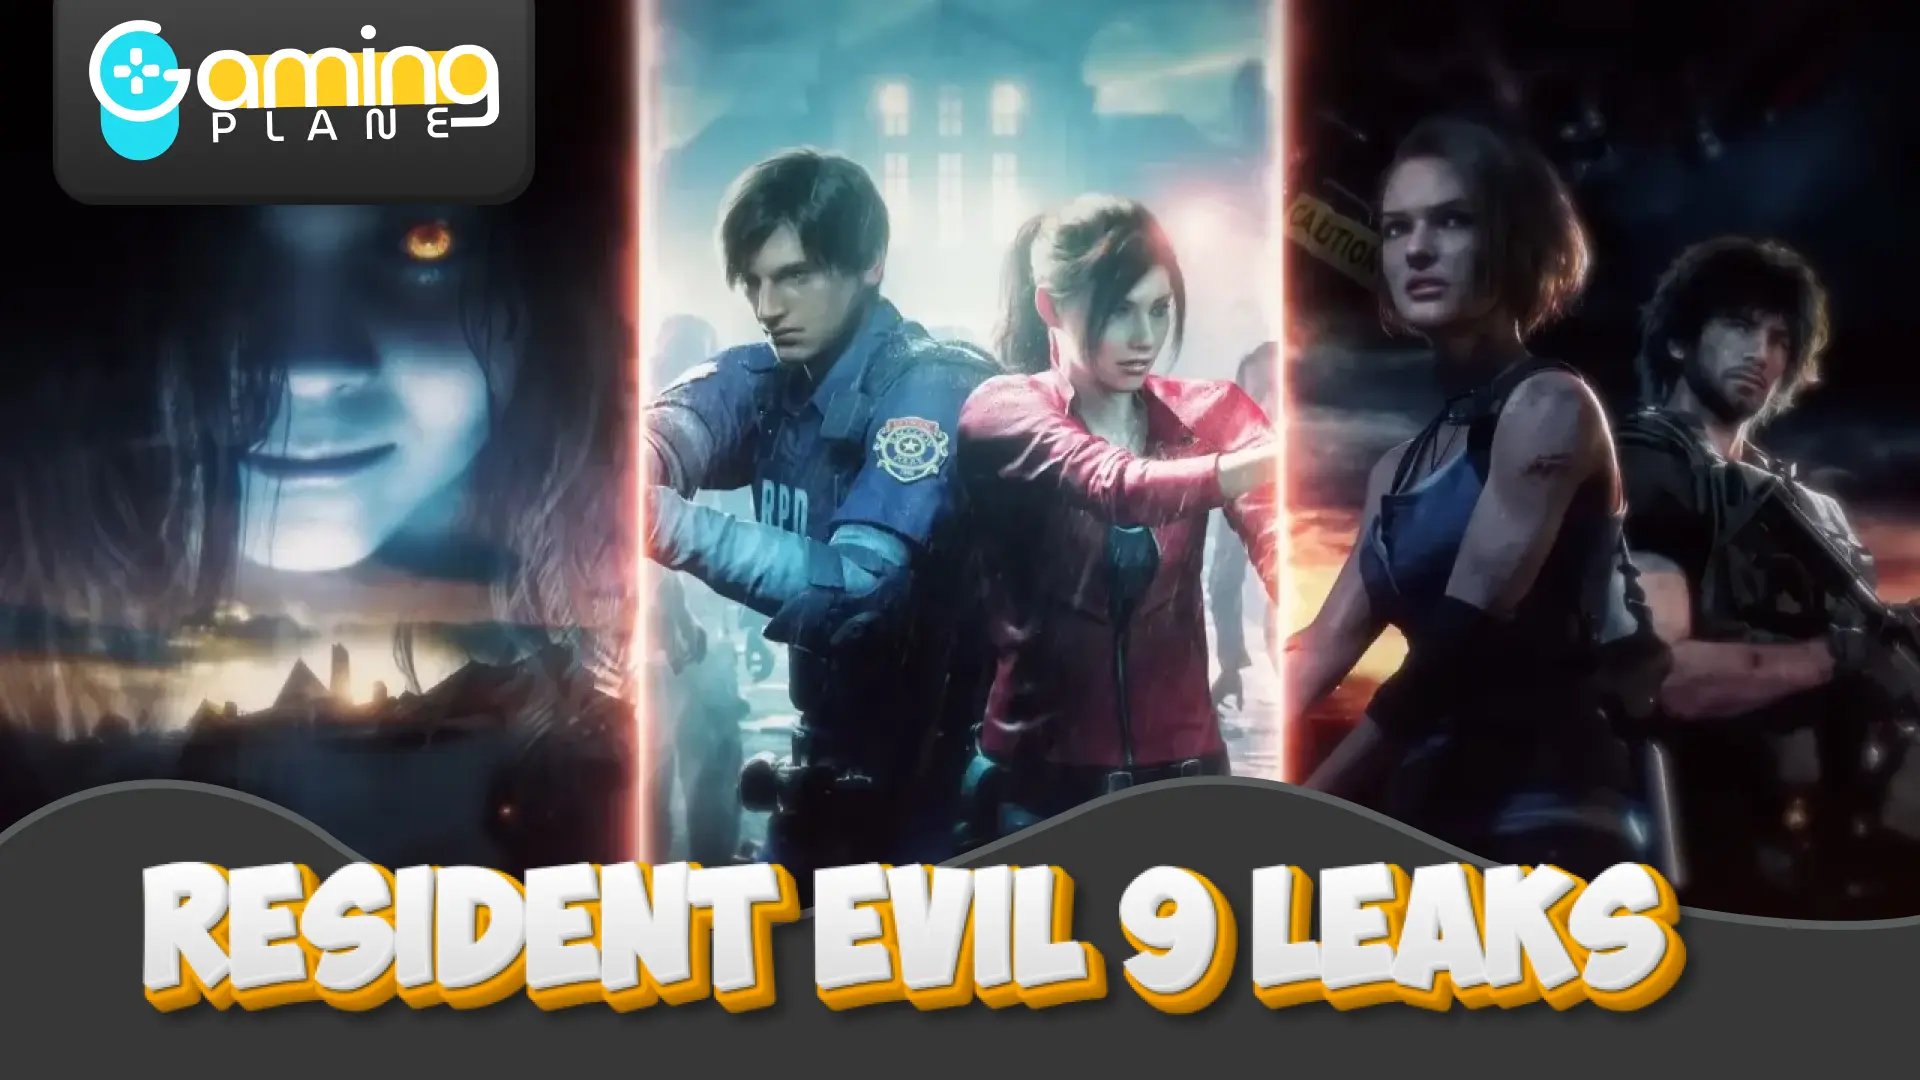 Resident Evil 9 Leak Exclusive Insights, Rumors & Details